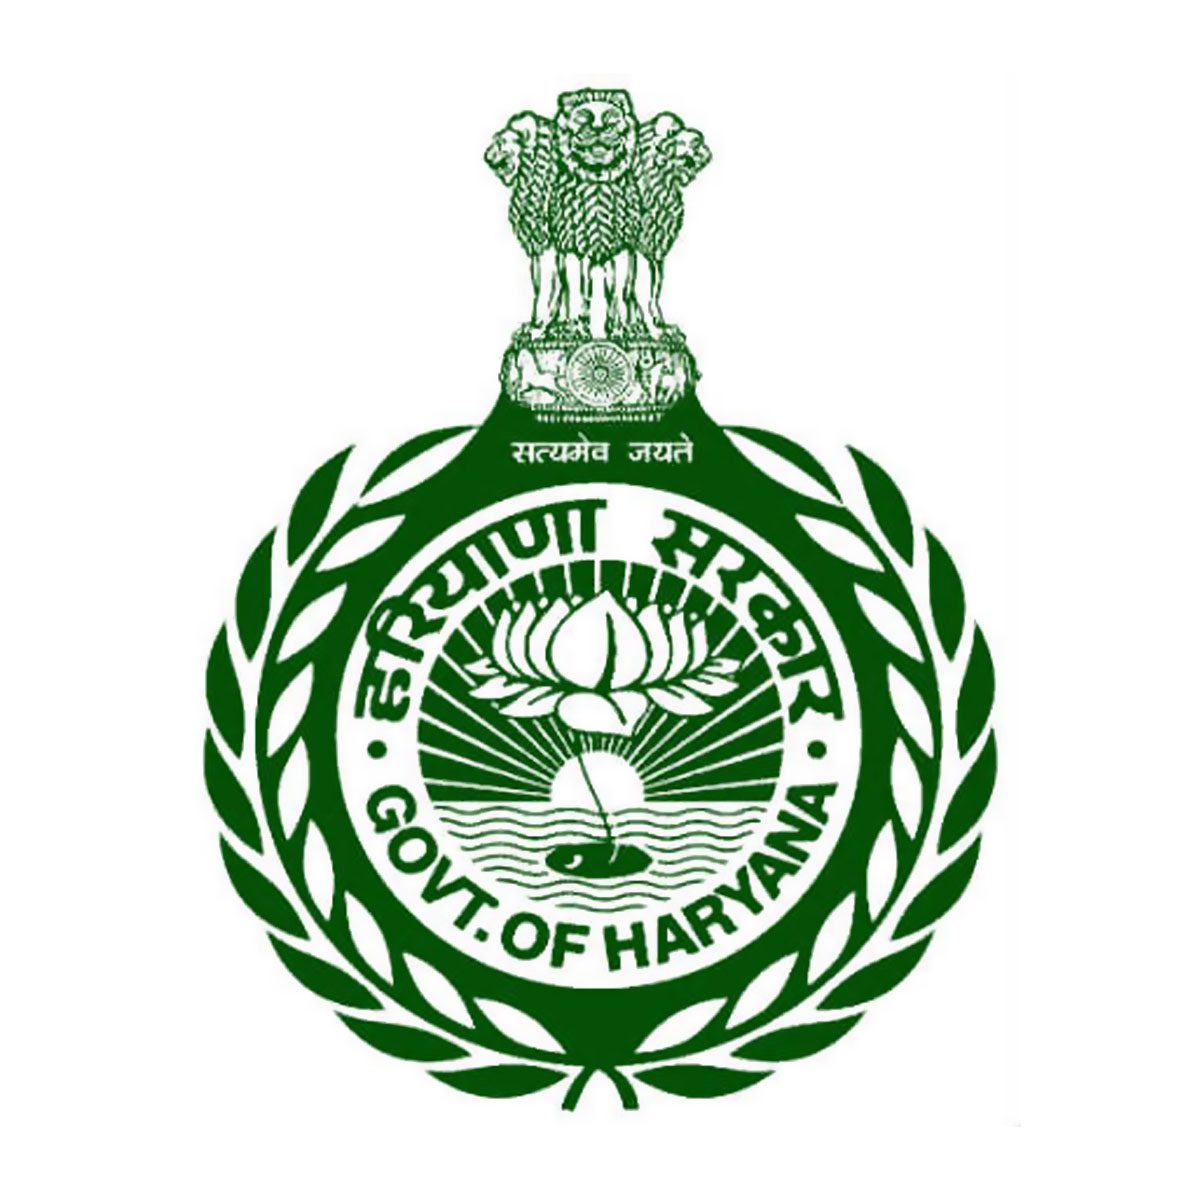 Hpsc Veterinary Surgeon Jobs Notification - Haryana Public Service Commission Recruitment 